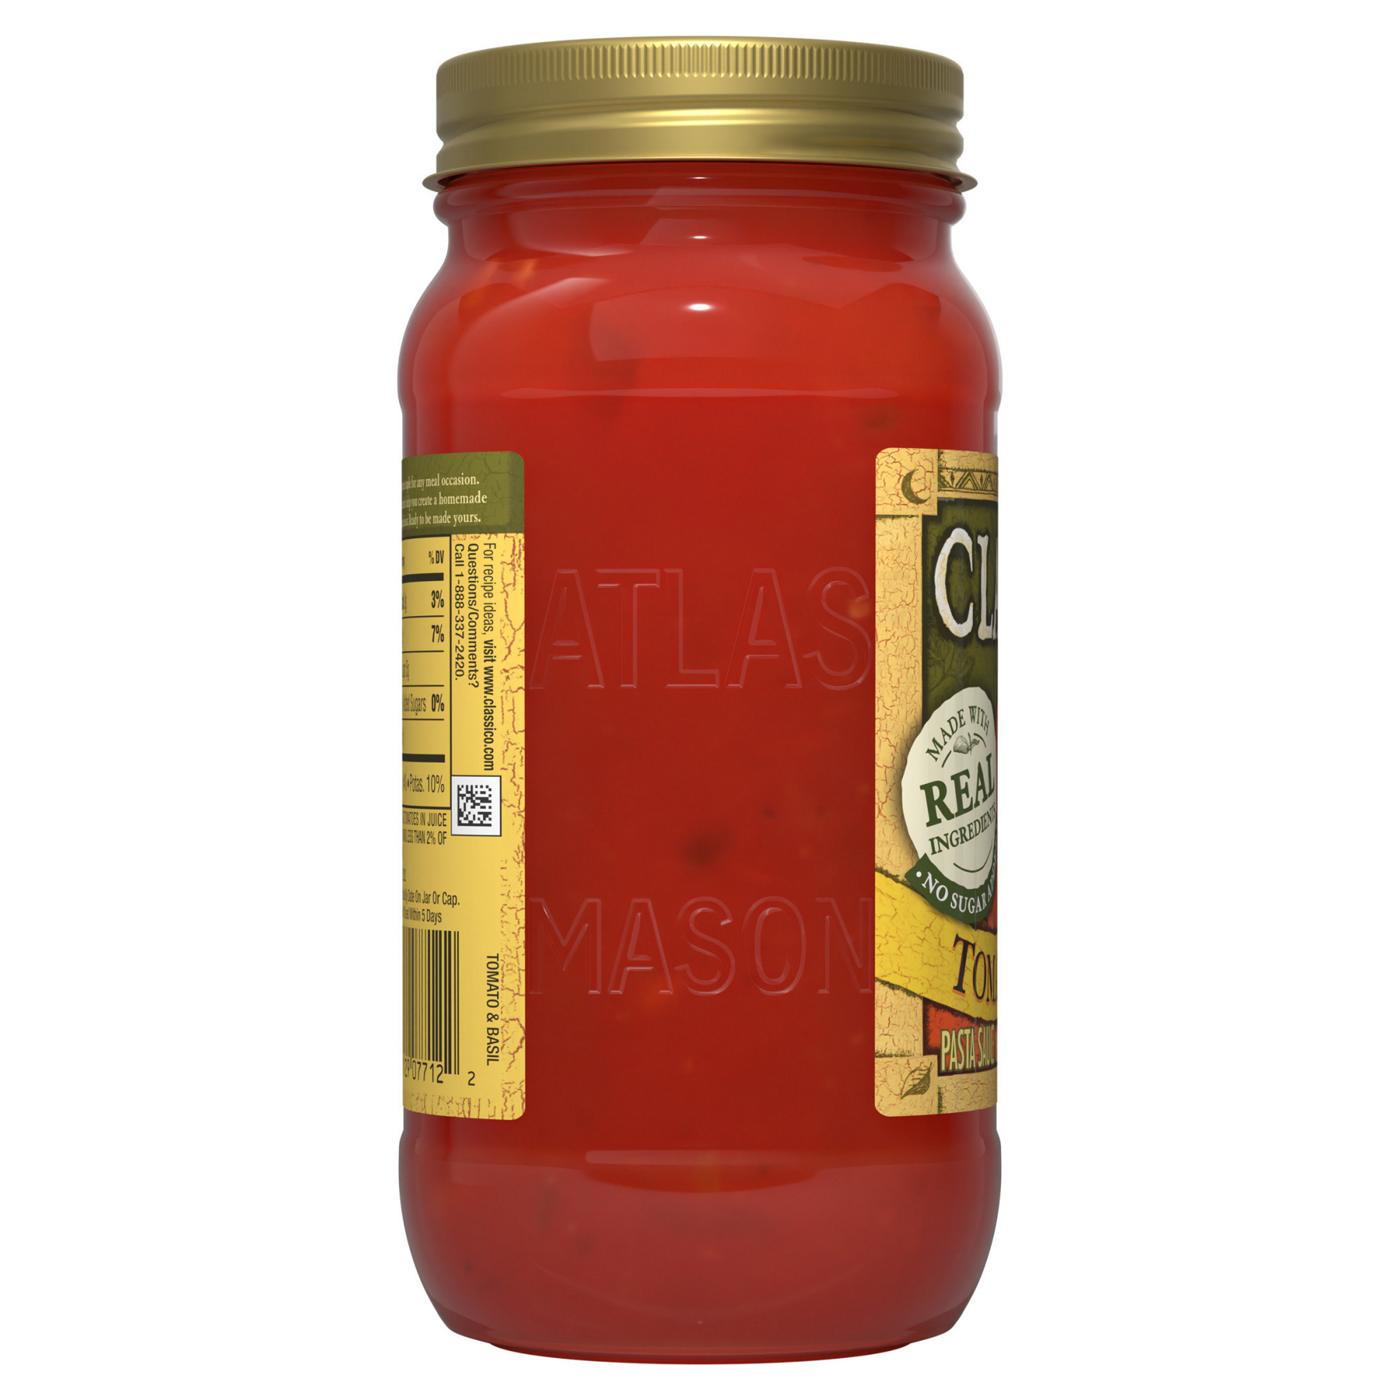 Classico Tomato & Basil Pasta Sauce; image 3 of 9